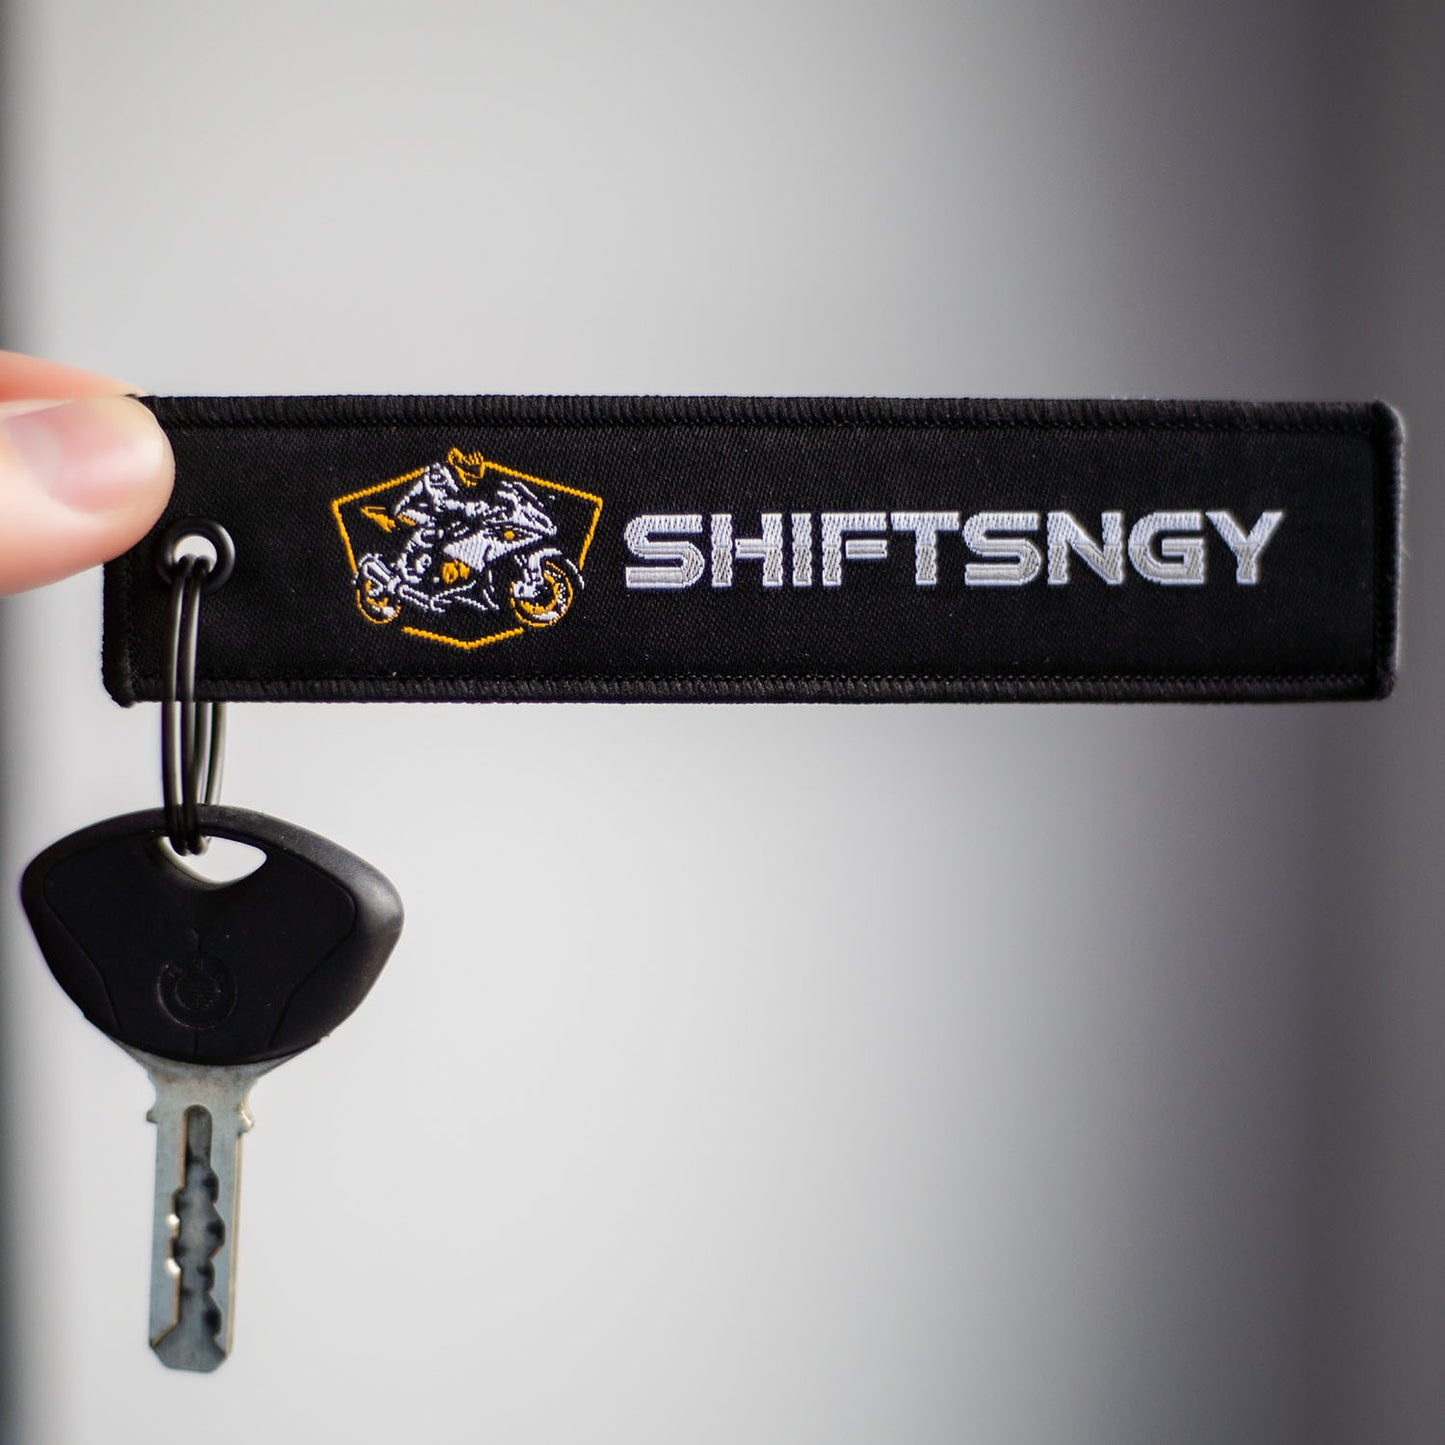 SHIFTSNGY keychain